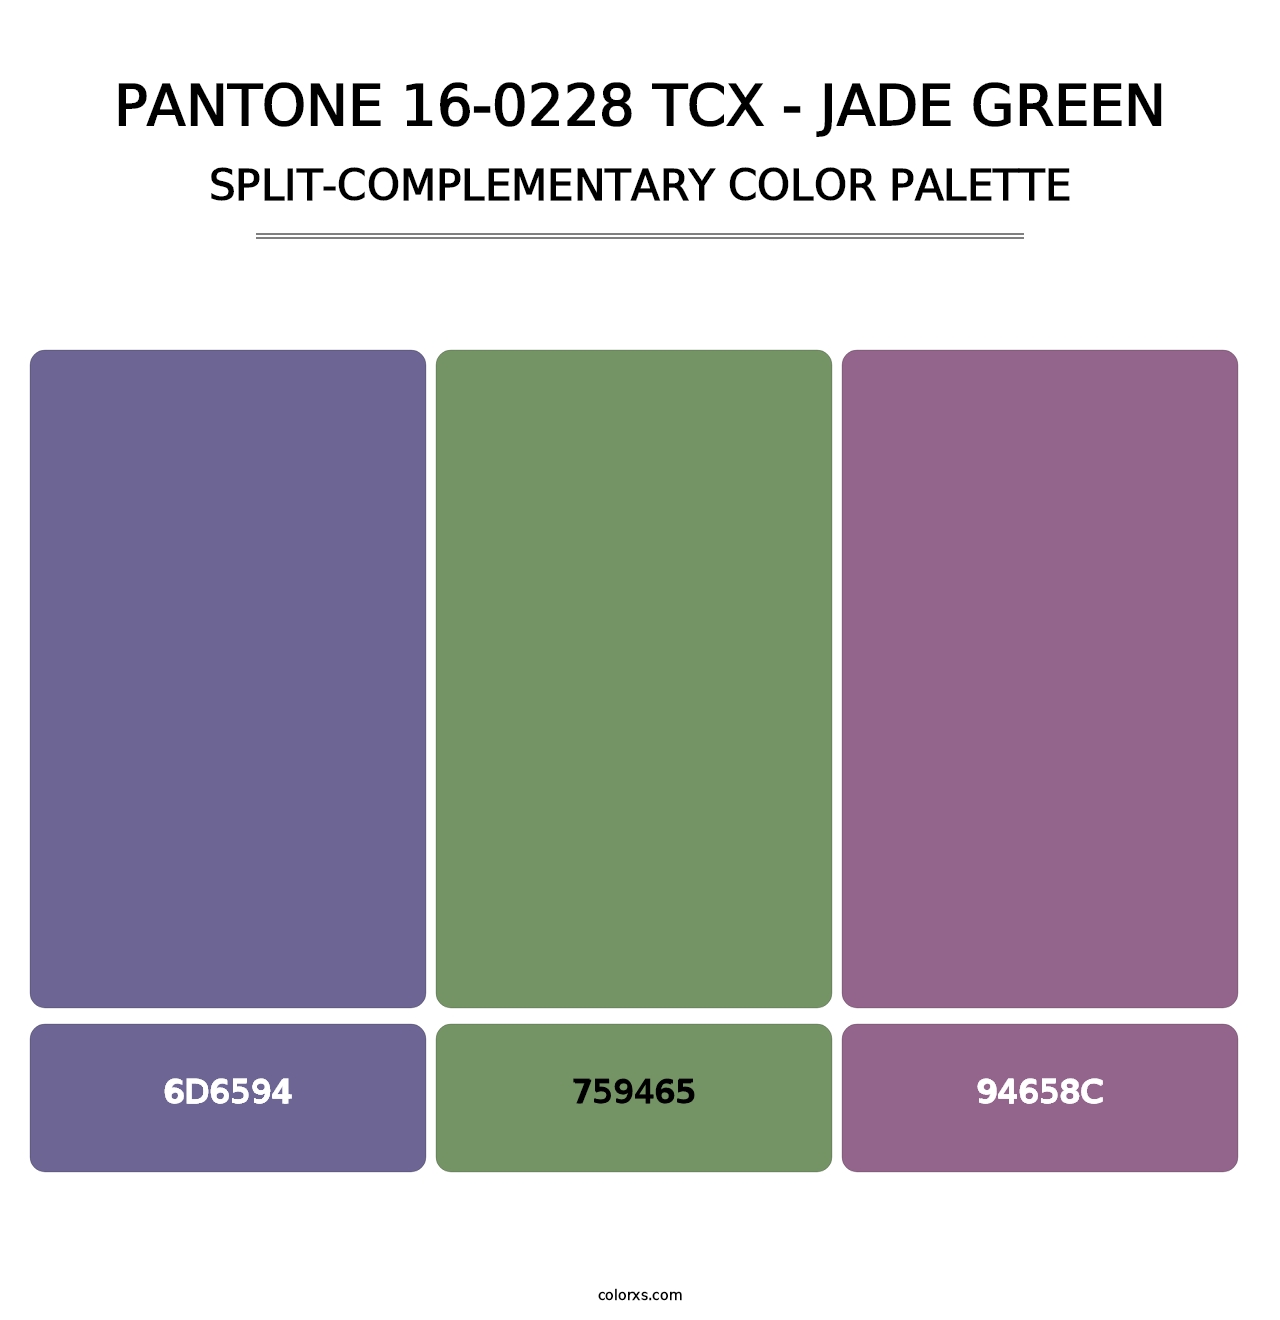 PANTONE 16-0228 TCX - Jade Green - Split-Complementary Color Palette